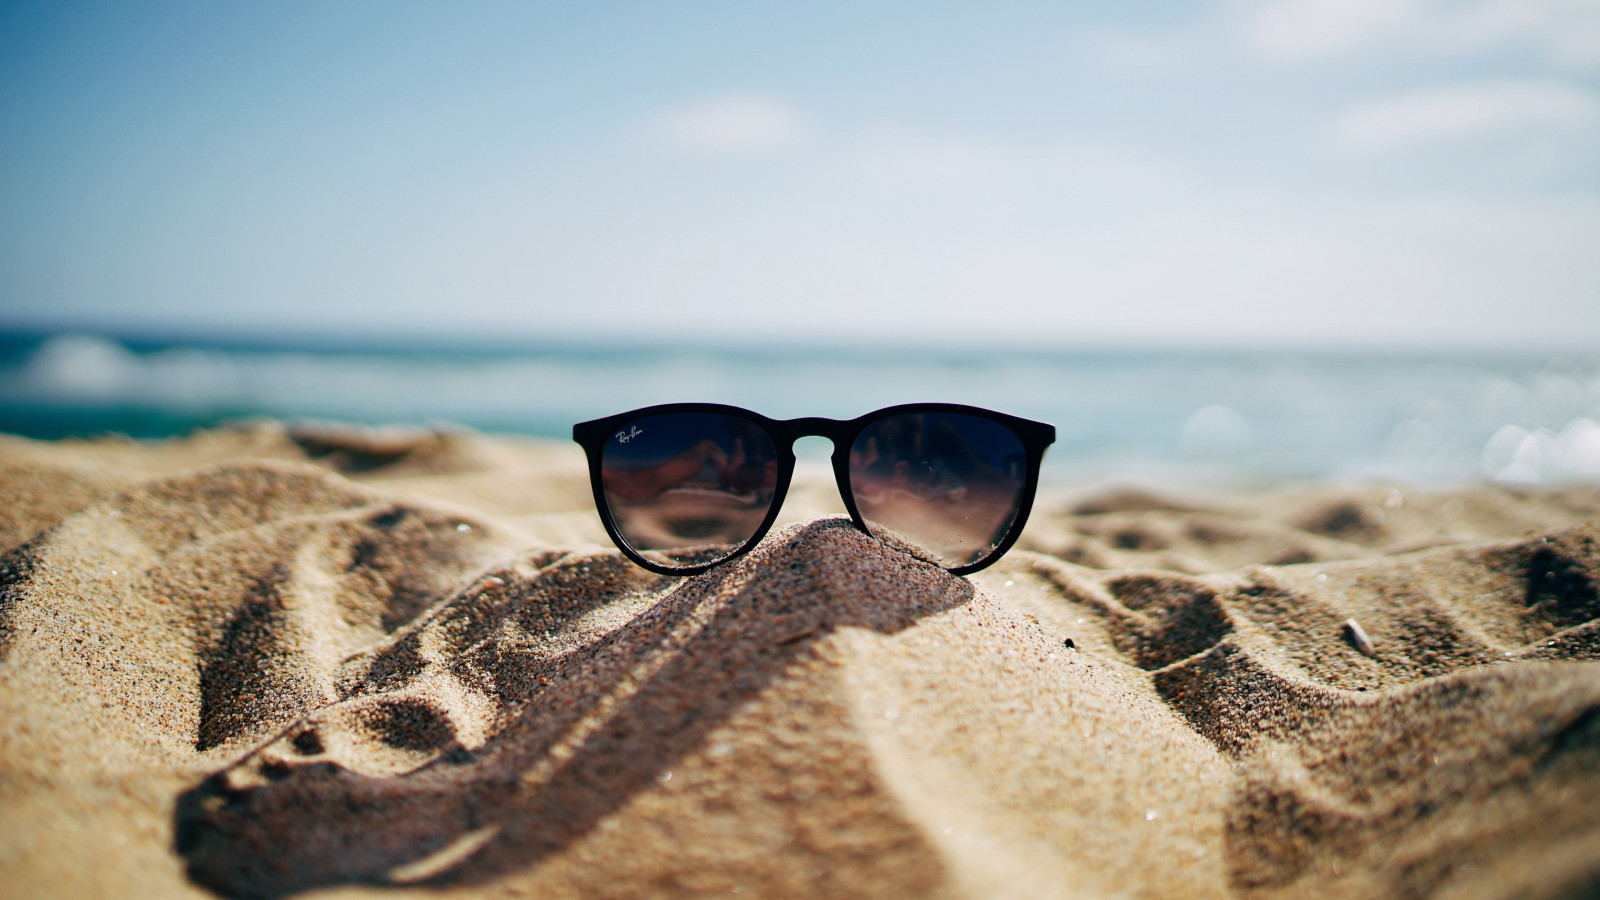 Ray Ban sunglasses on hot sand beach wallpaper 1600x900